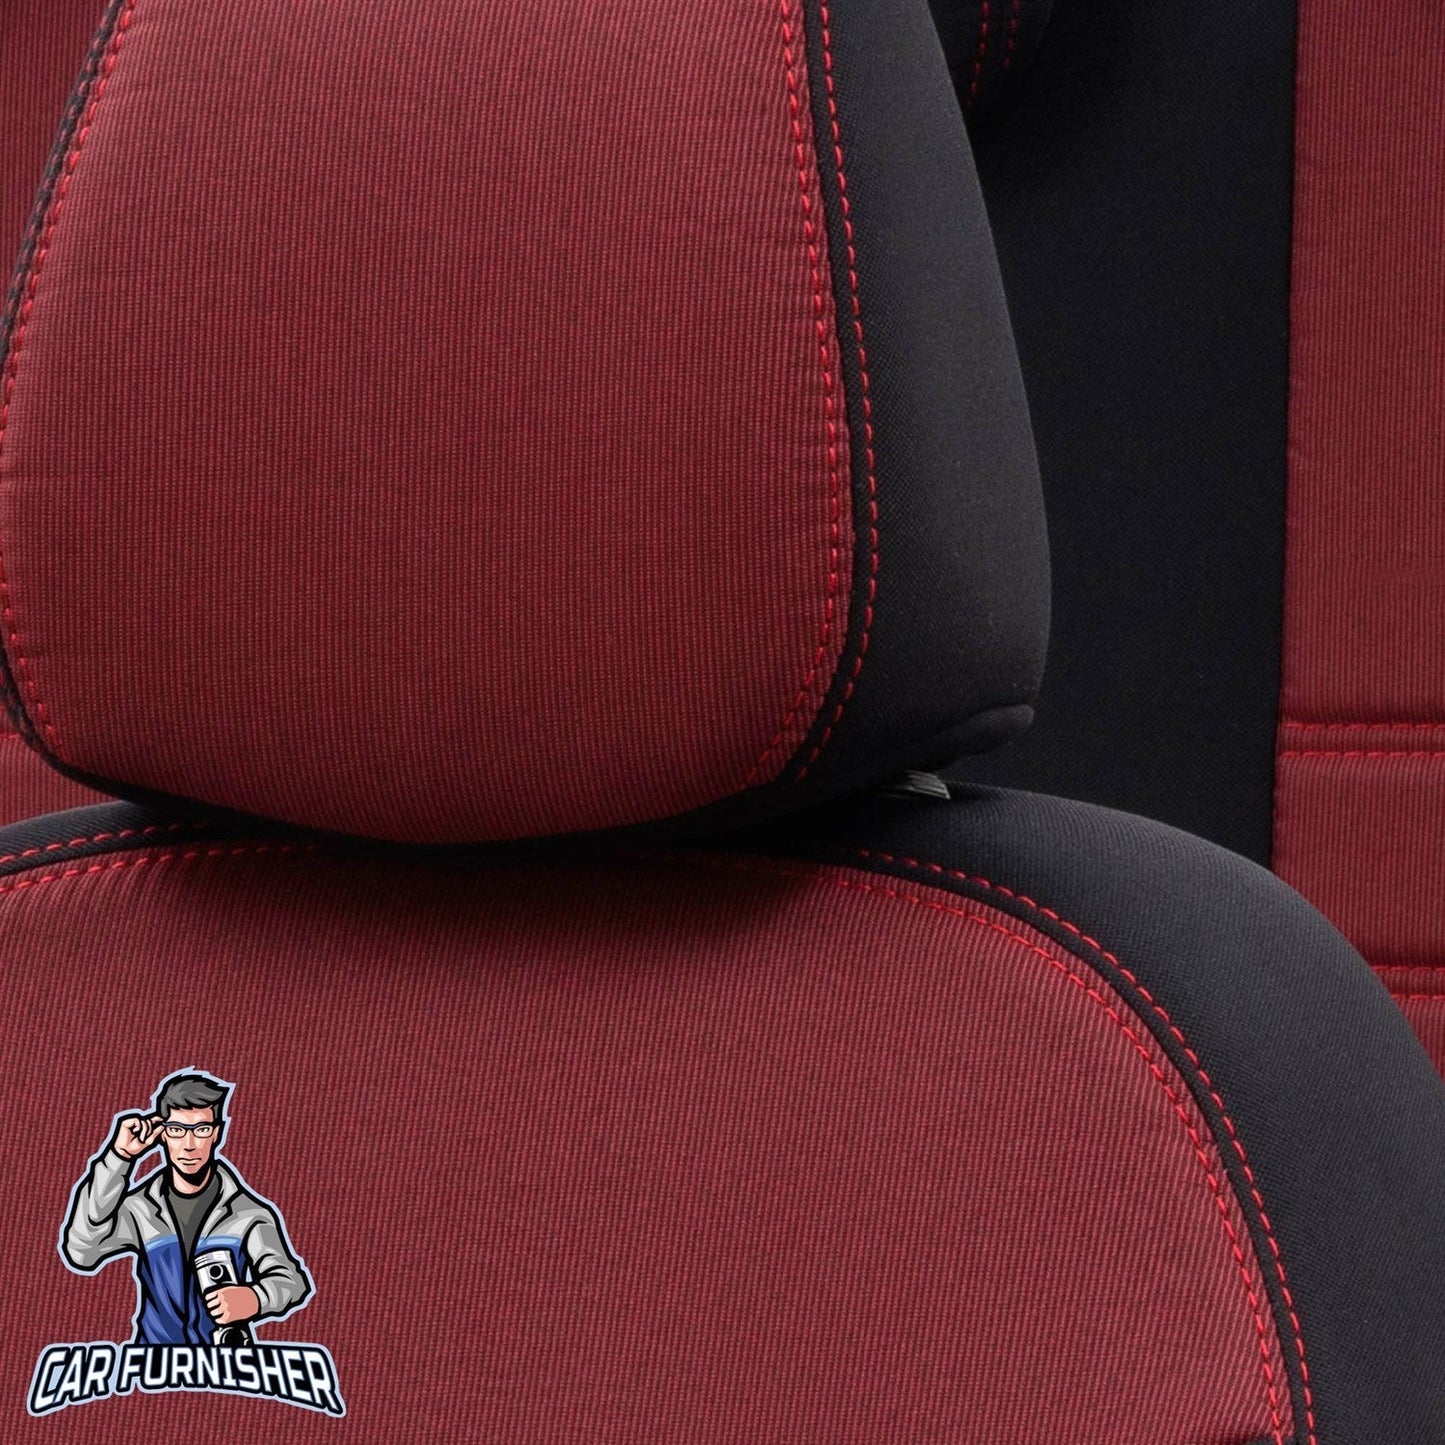 Proton Gen-2 Seat Covers Original Jacquard Design Red Jacquard Fabric